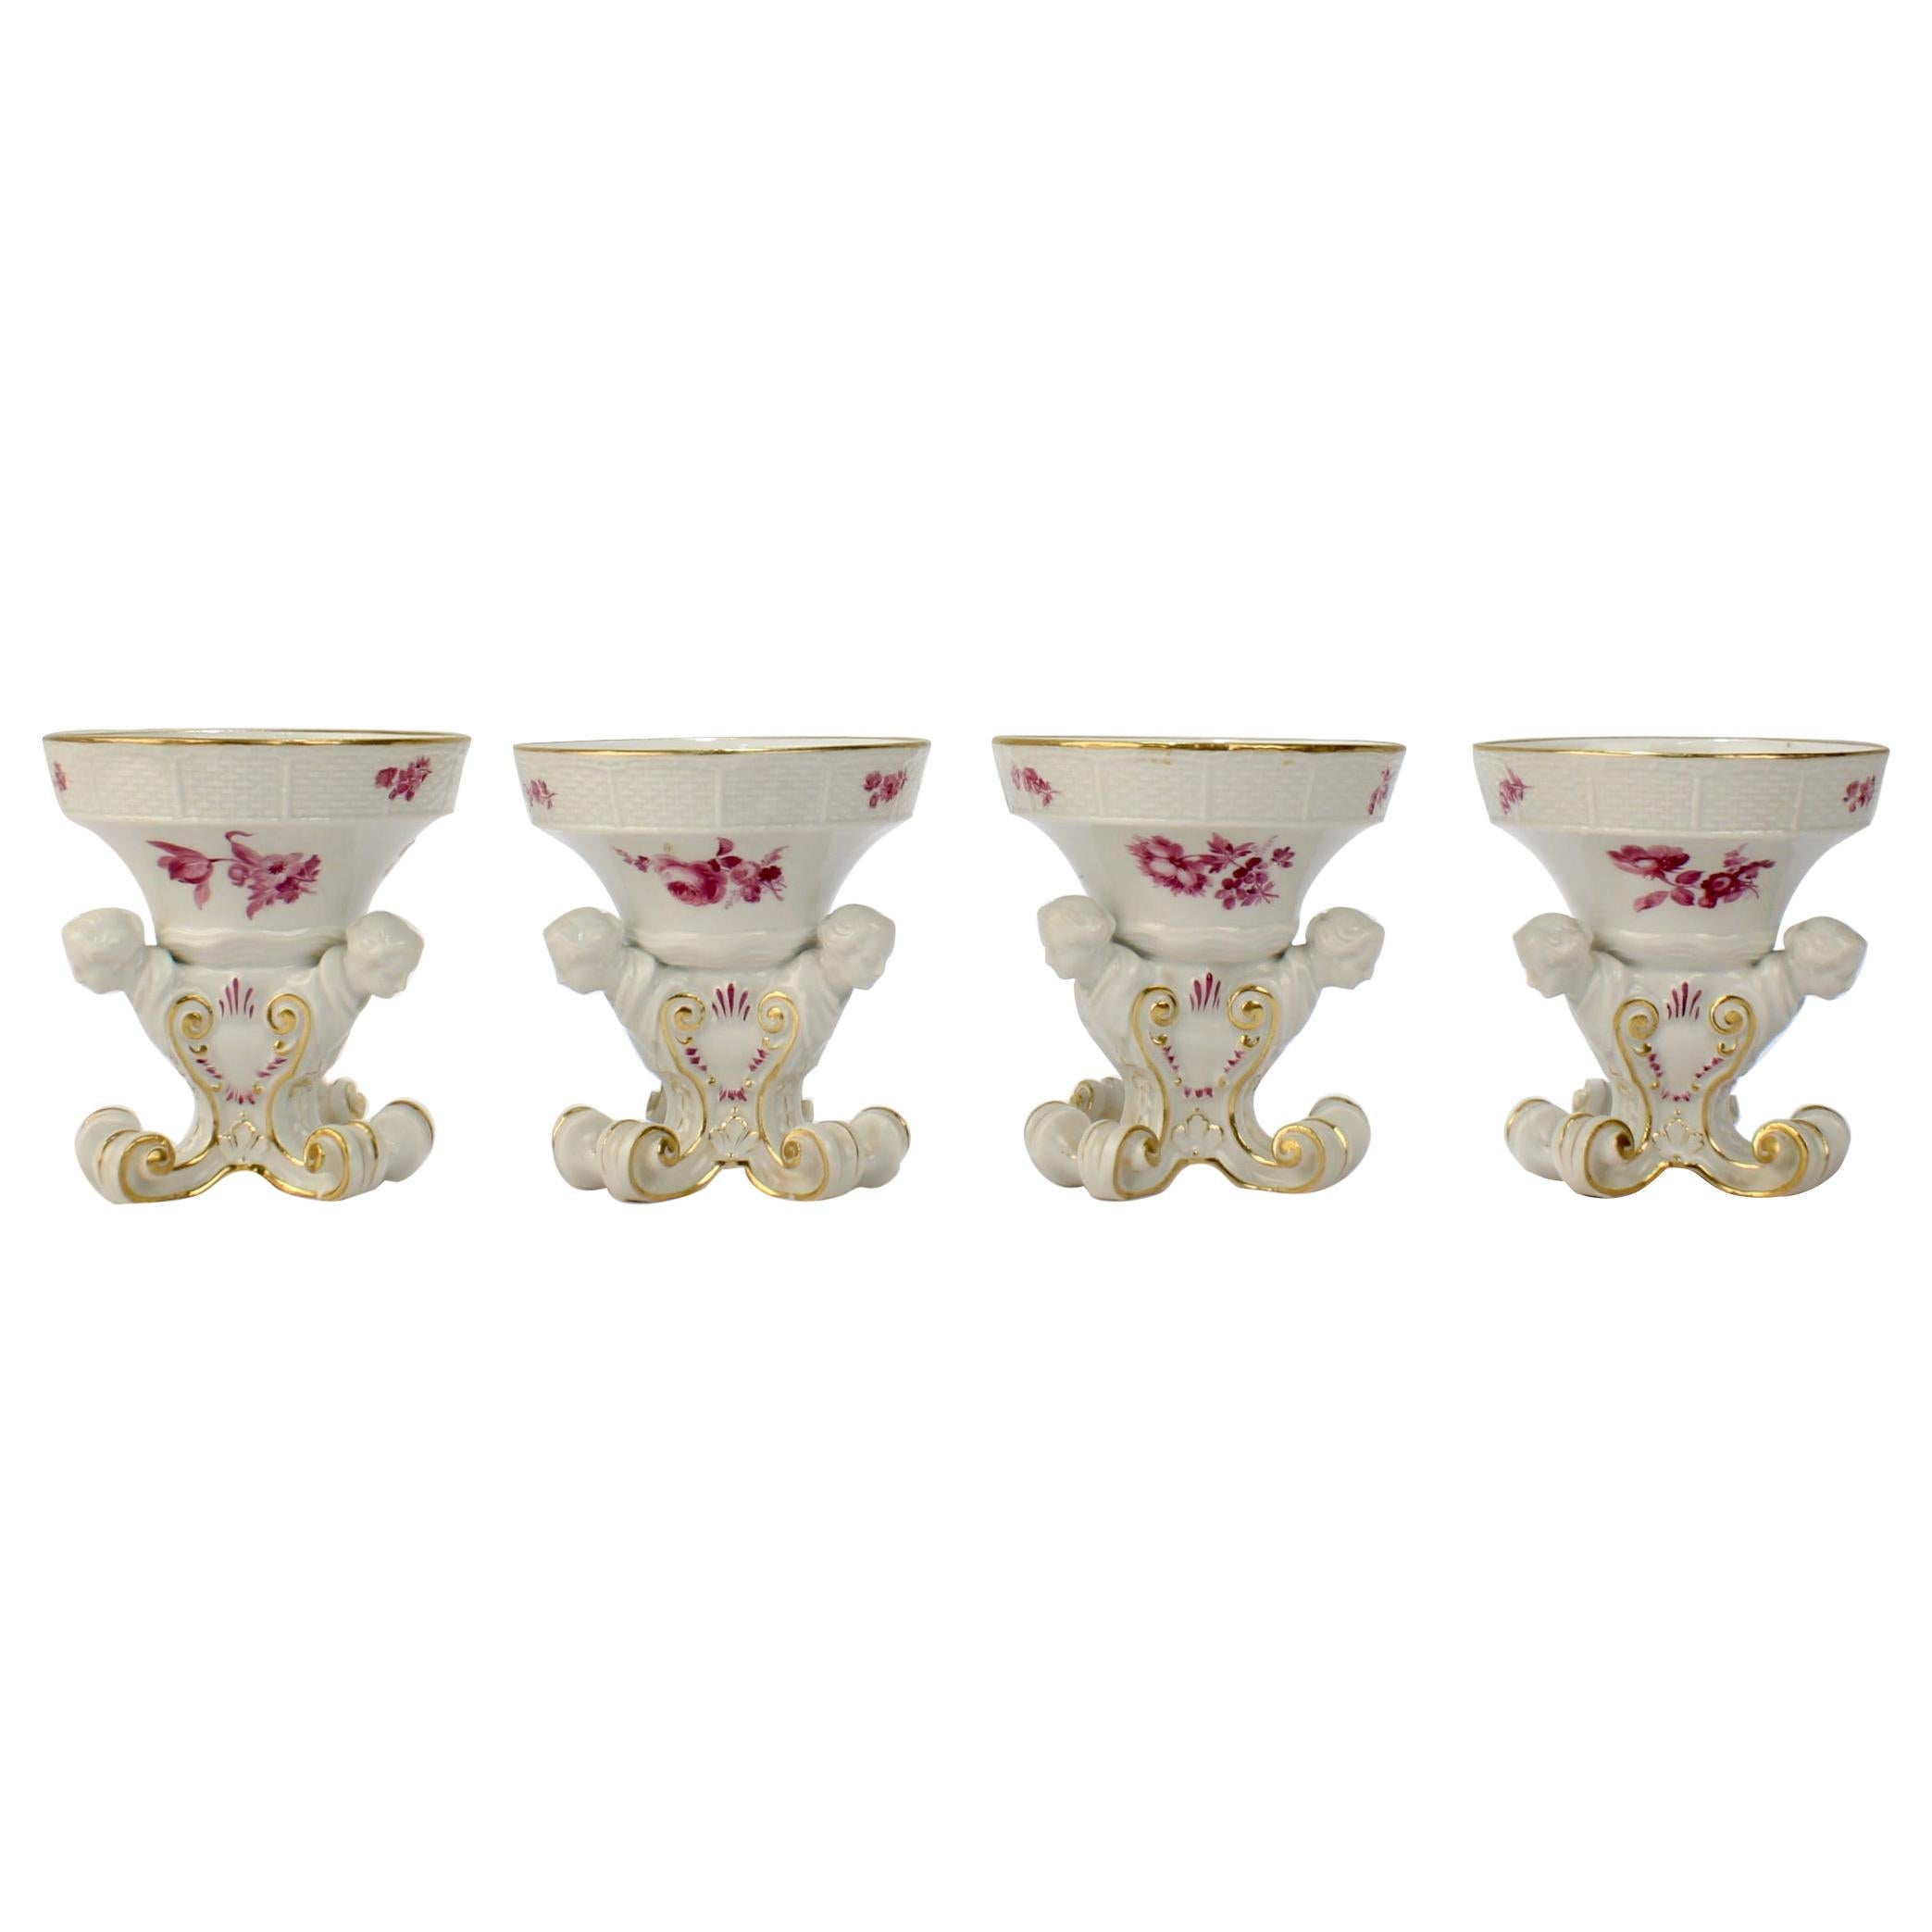 4 Antique Meissen Porcelain Footed Frauenkopf Salt Cellars with Puce Flowers For Sale